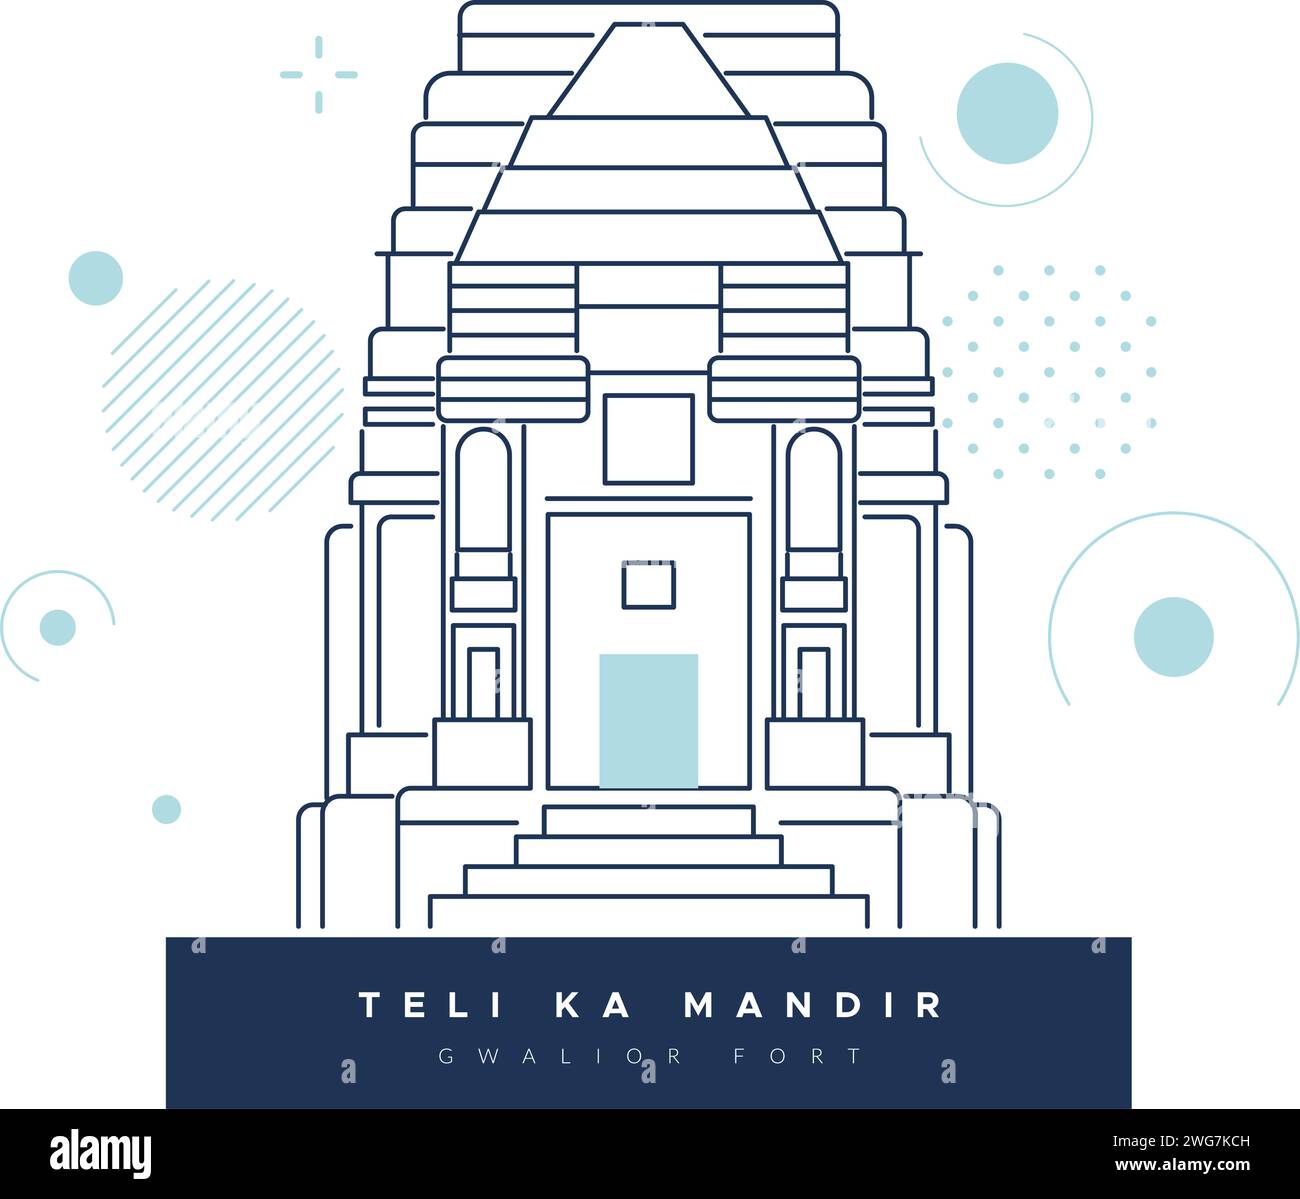 TELI ka Mandir - Temple Telika - Gwalior - Illustration stock comme fichier EPS 10 Illustration de Vecteur